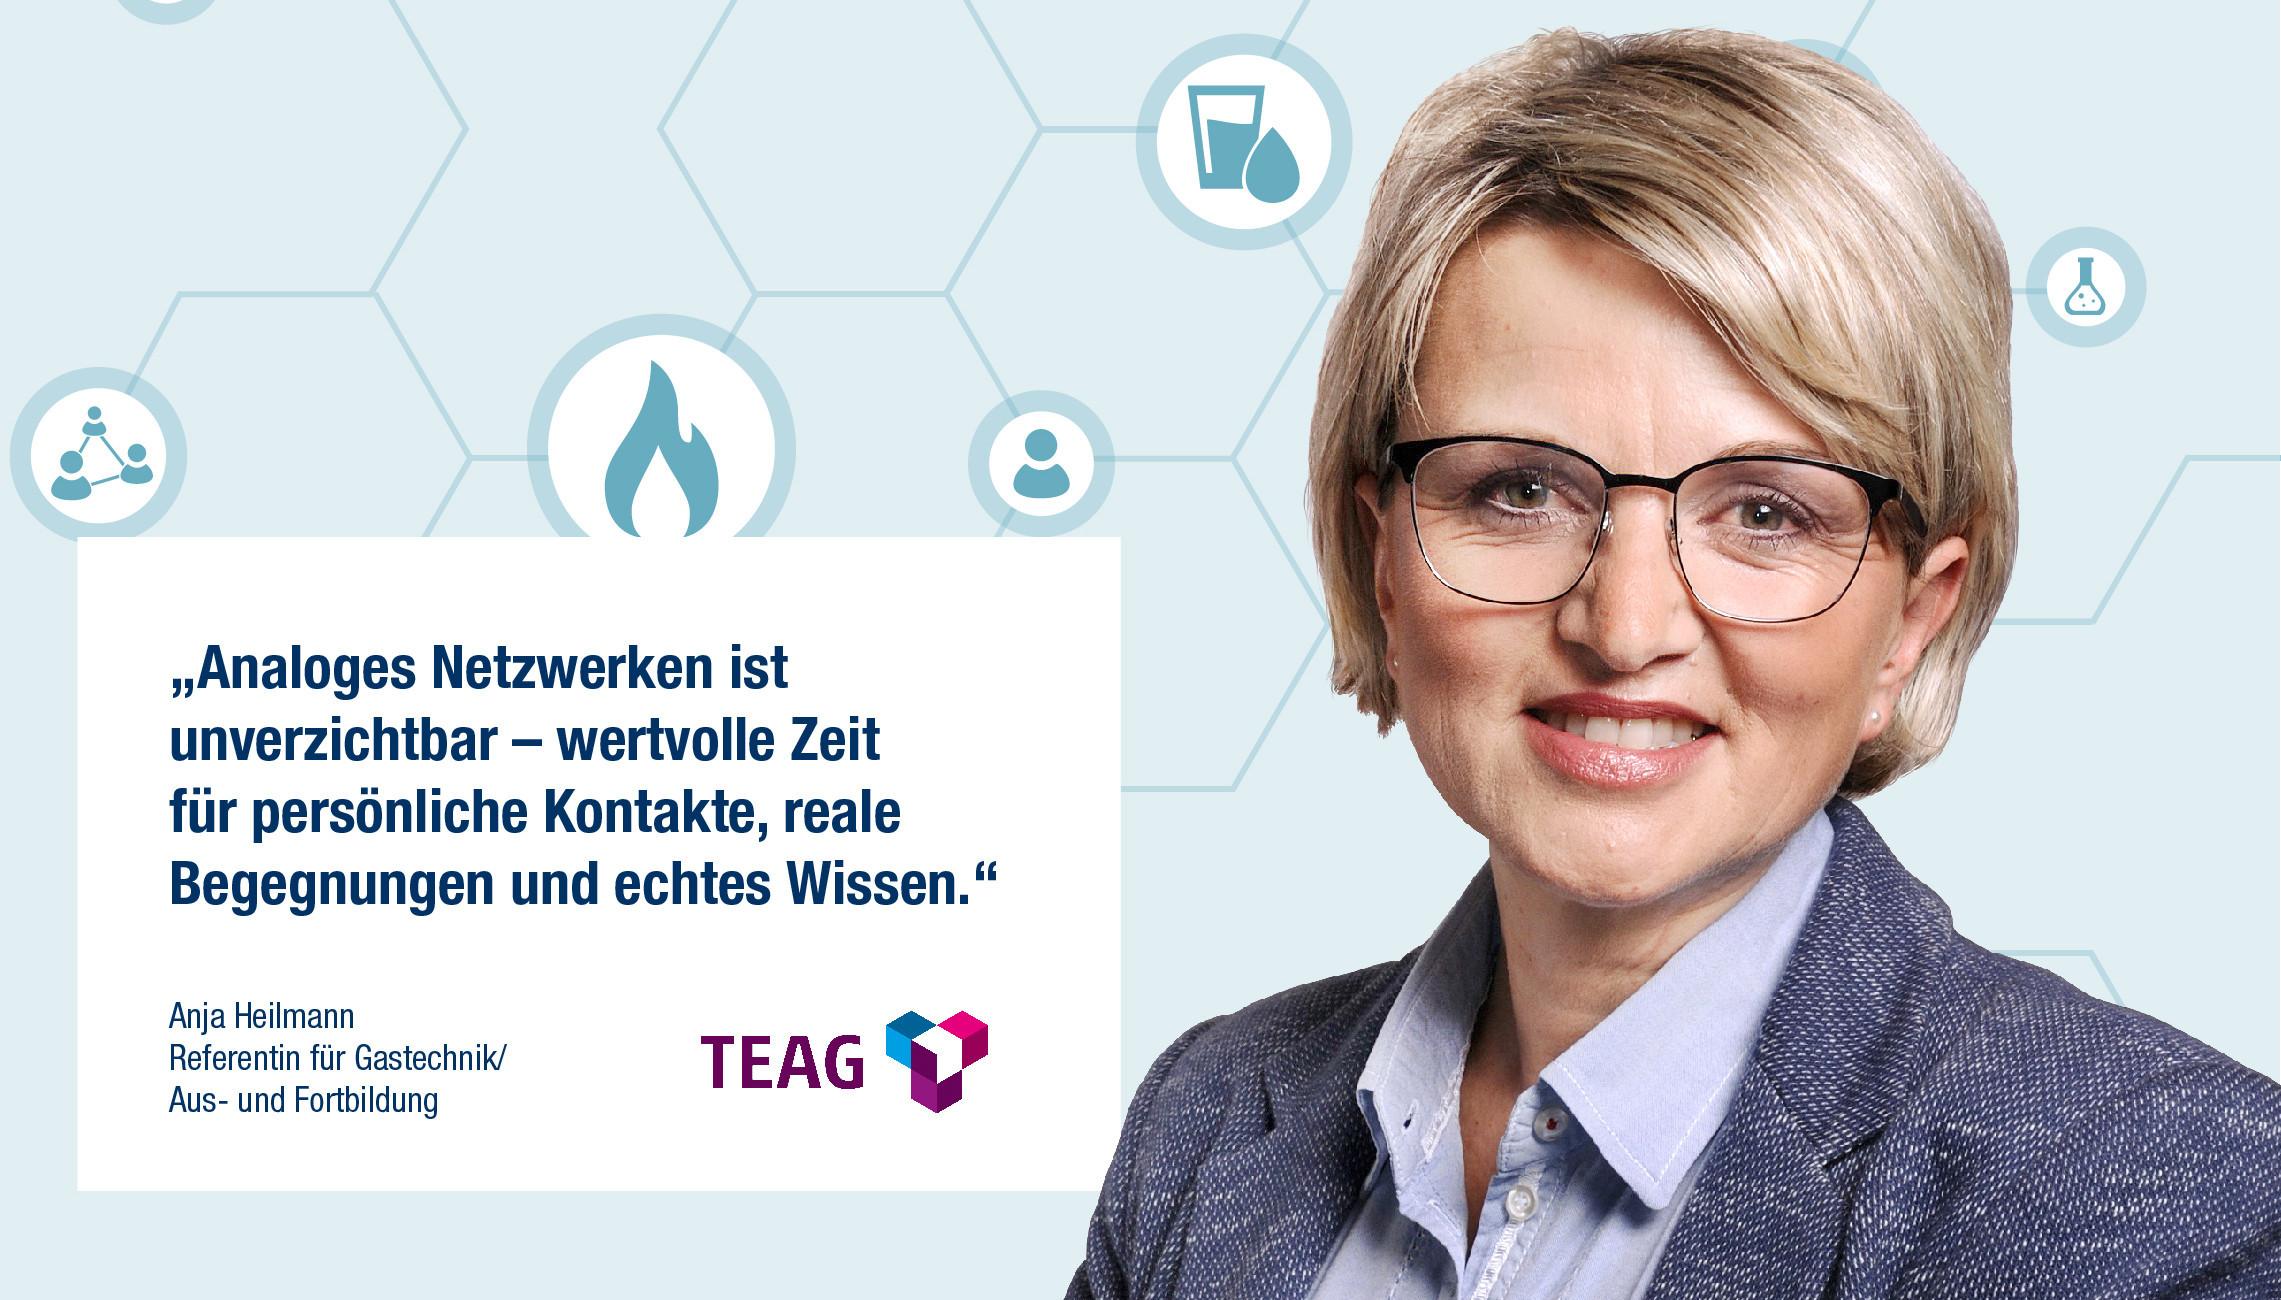 Anja Heilmann, TEAG Thüringer Energie AG